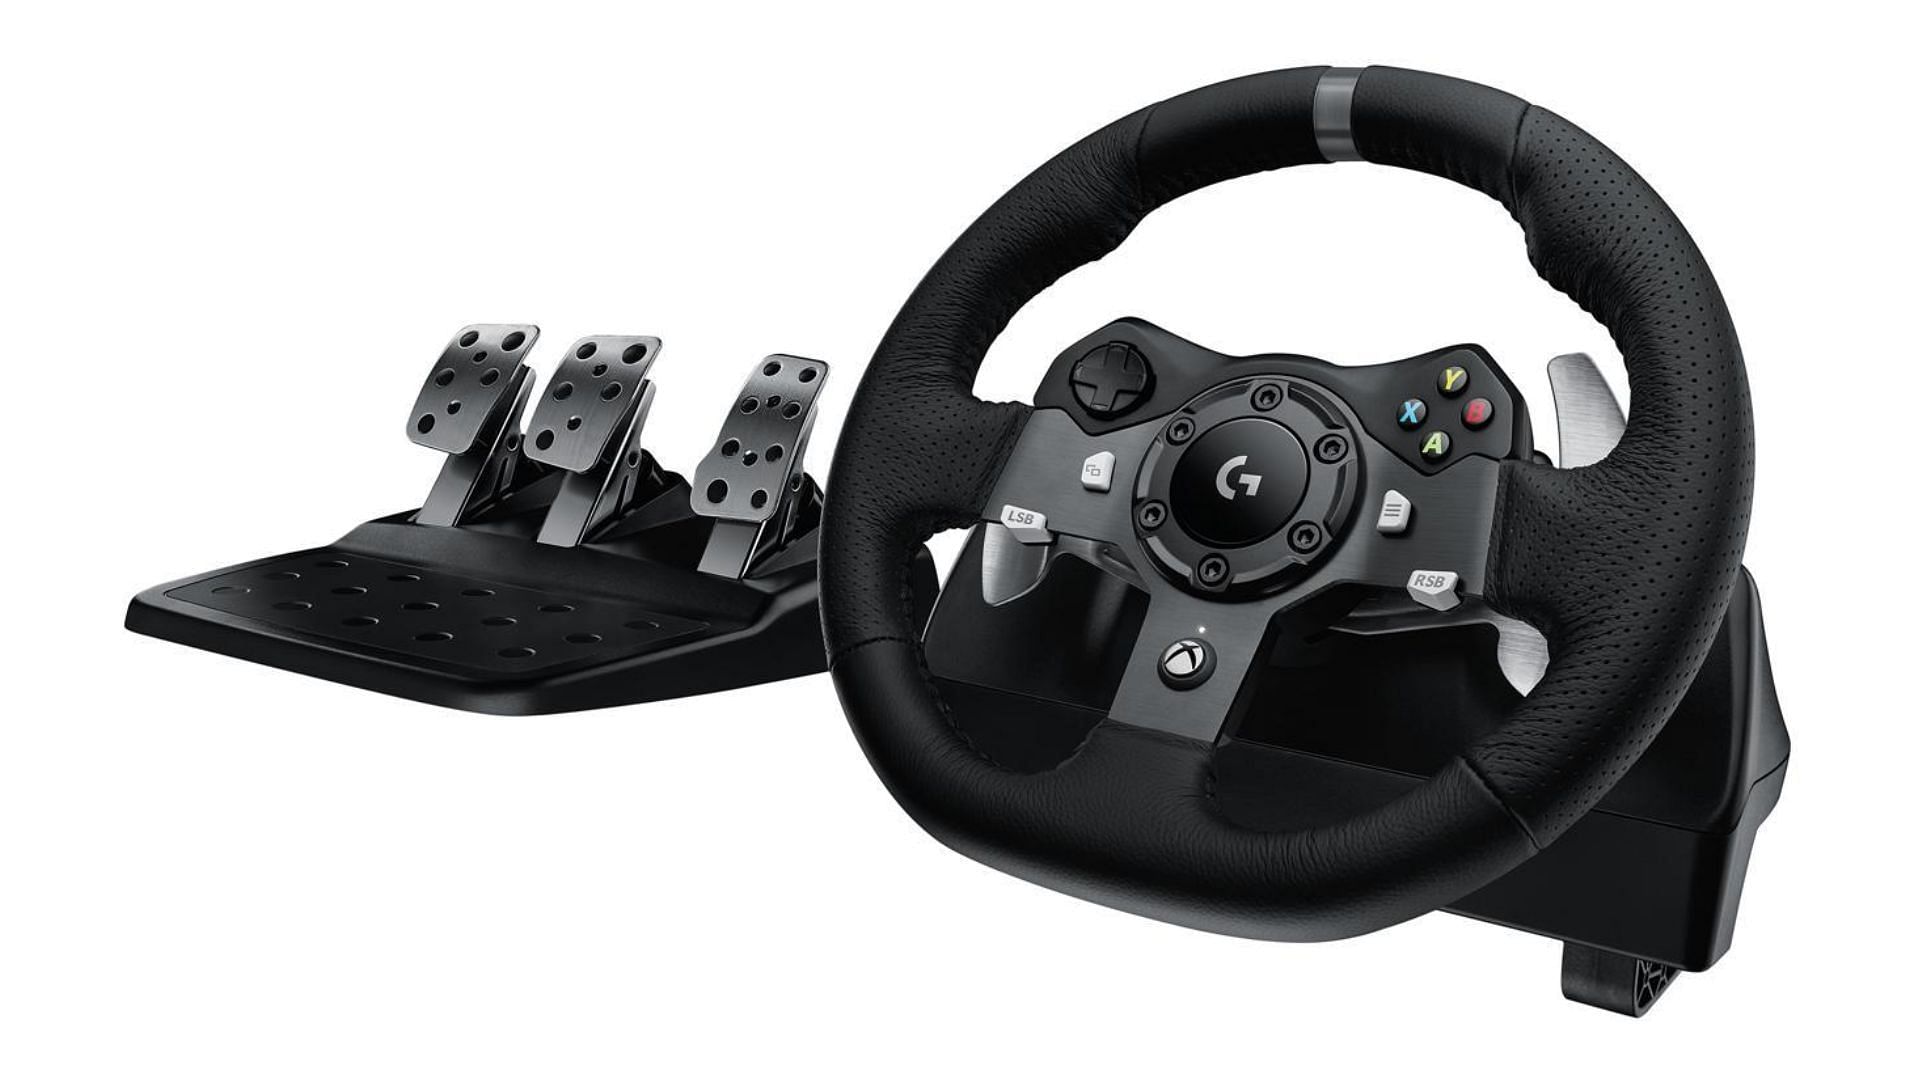 The Logitech G920 Driving Force racing wheel (Image via Newegg)